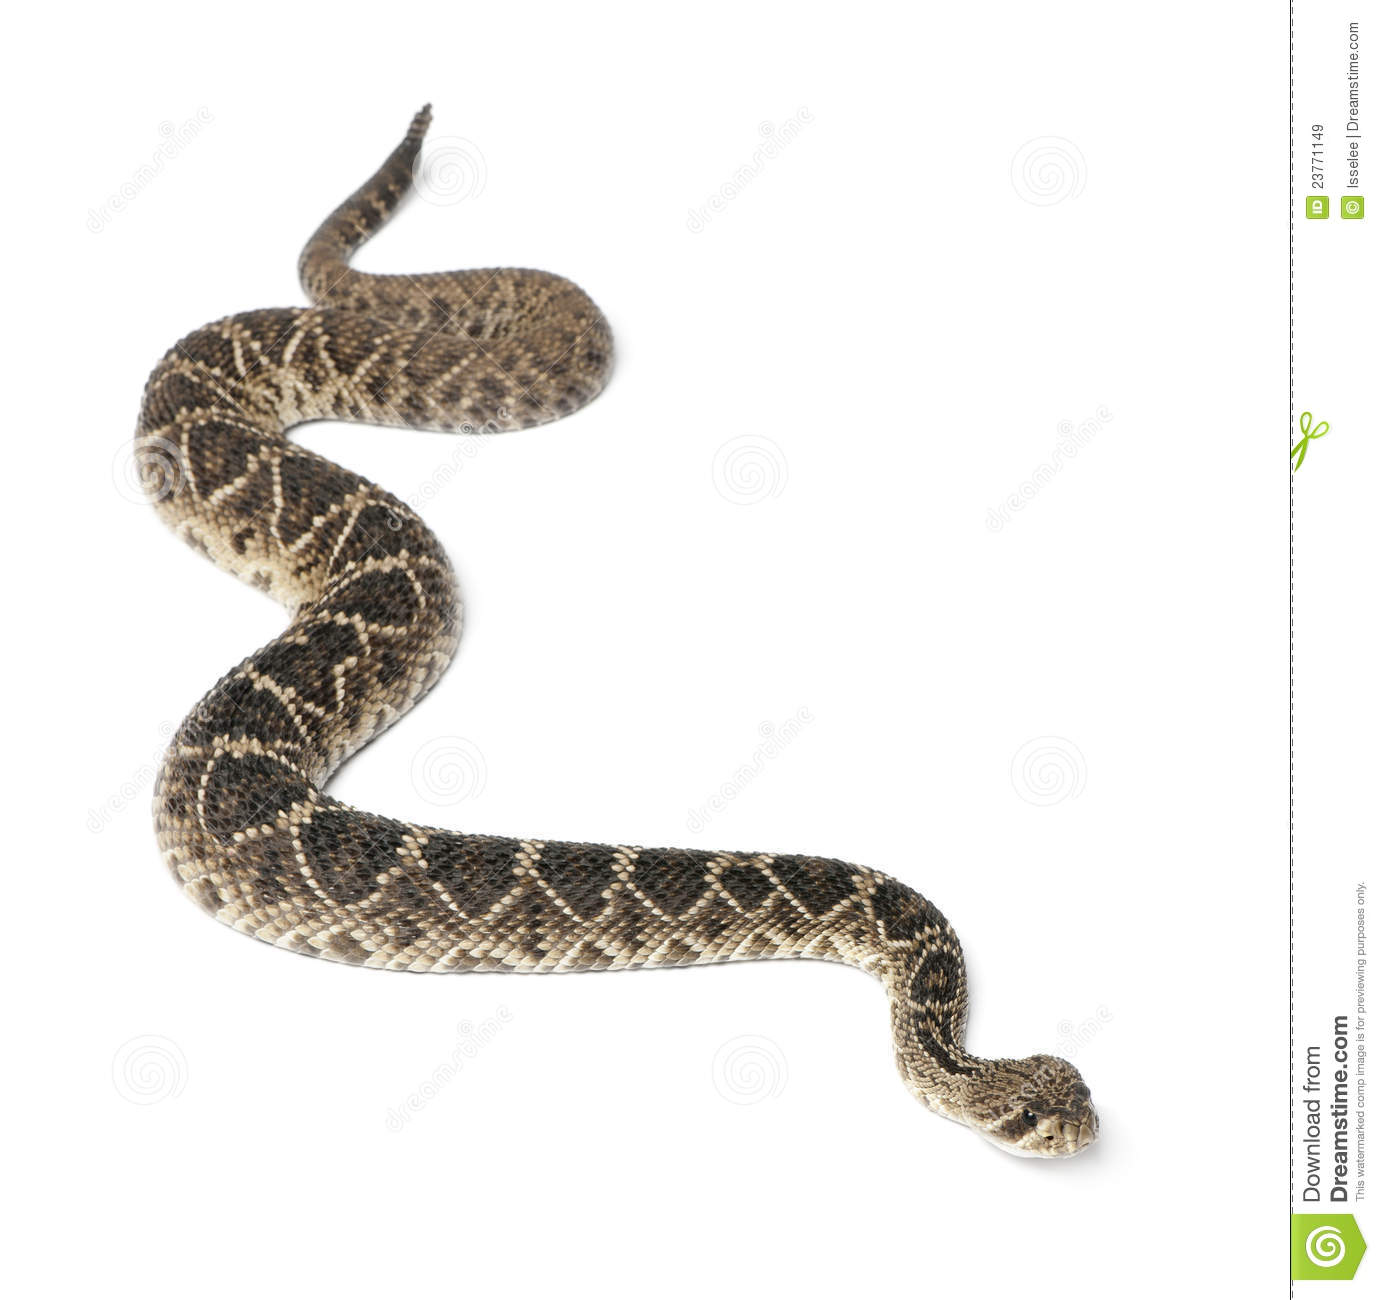 Eastern Diamondback Rattlesnake Royalty Free Stock Images   Image